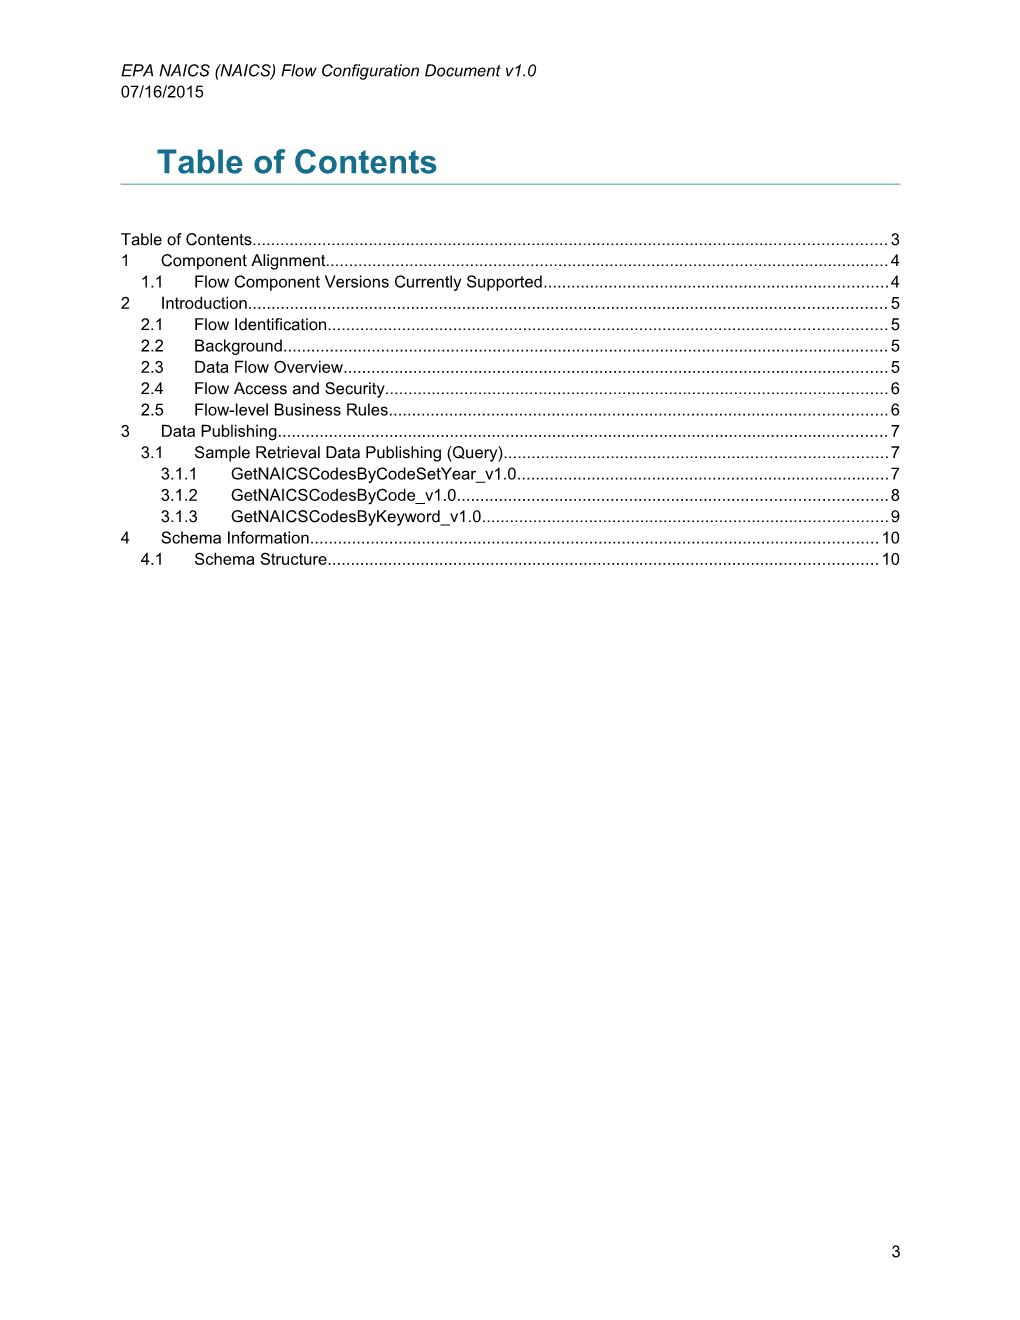 EPA NAICS (NAICS) Flow Configuration Document V1.0